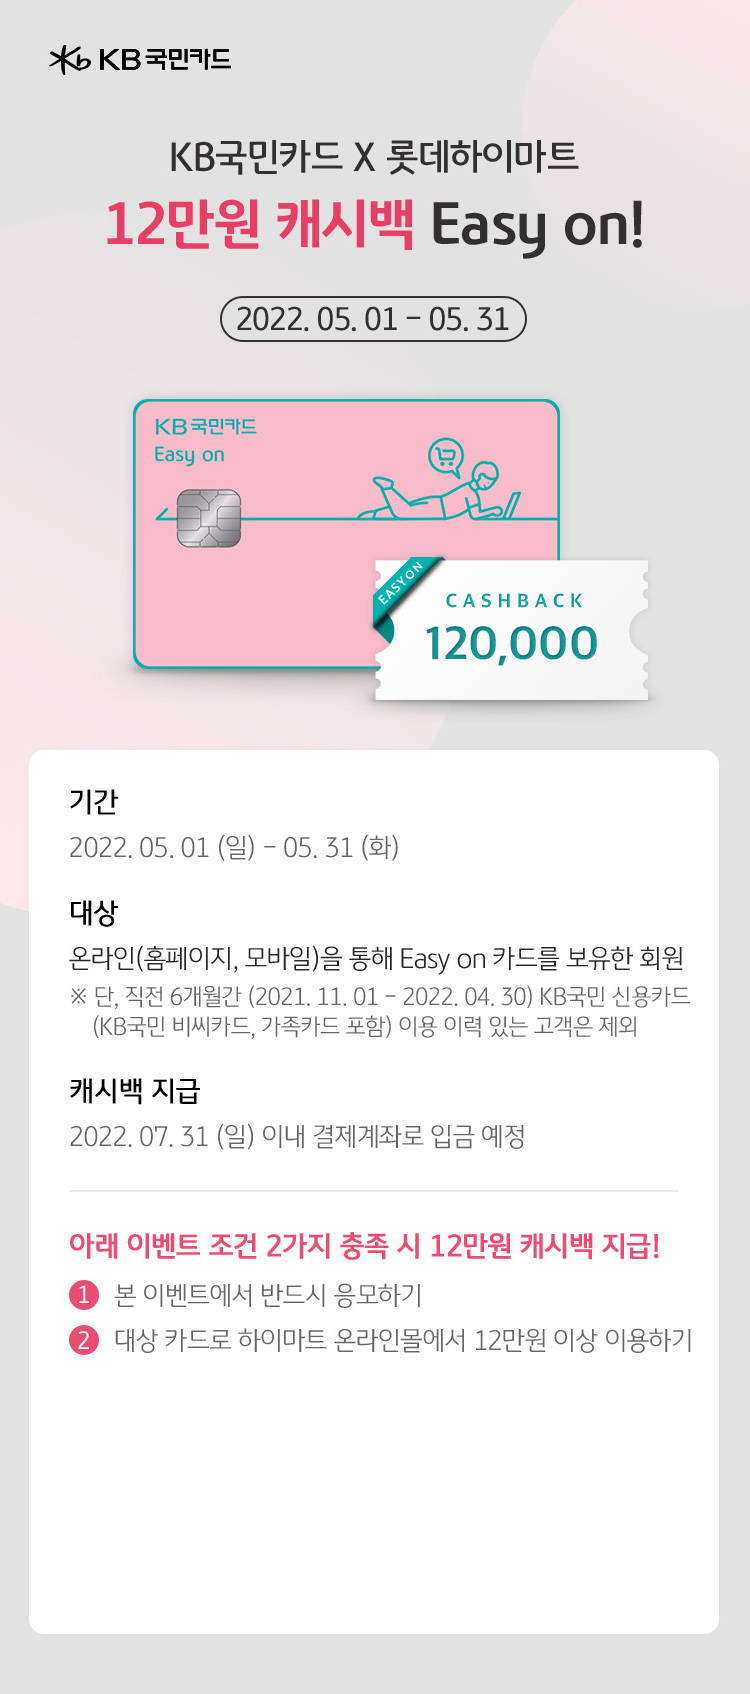 KB국민카드 X 롯데하이마트, 12만원 캐시백 Easy on!